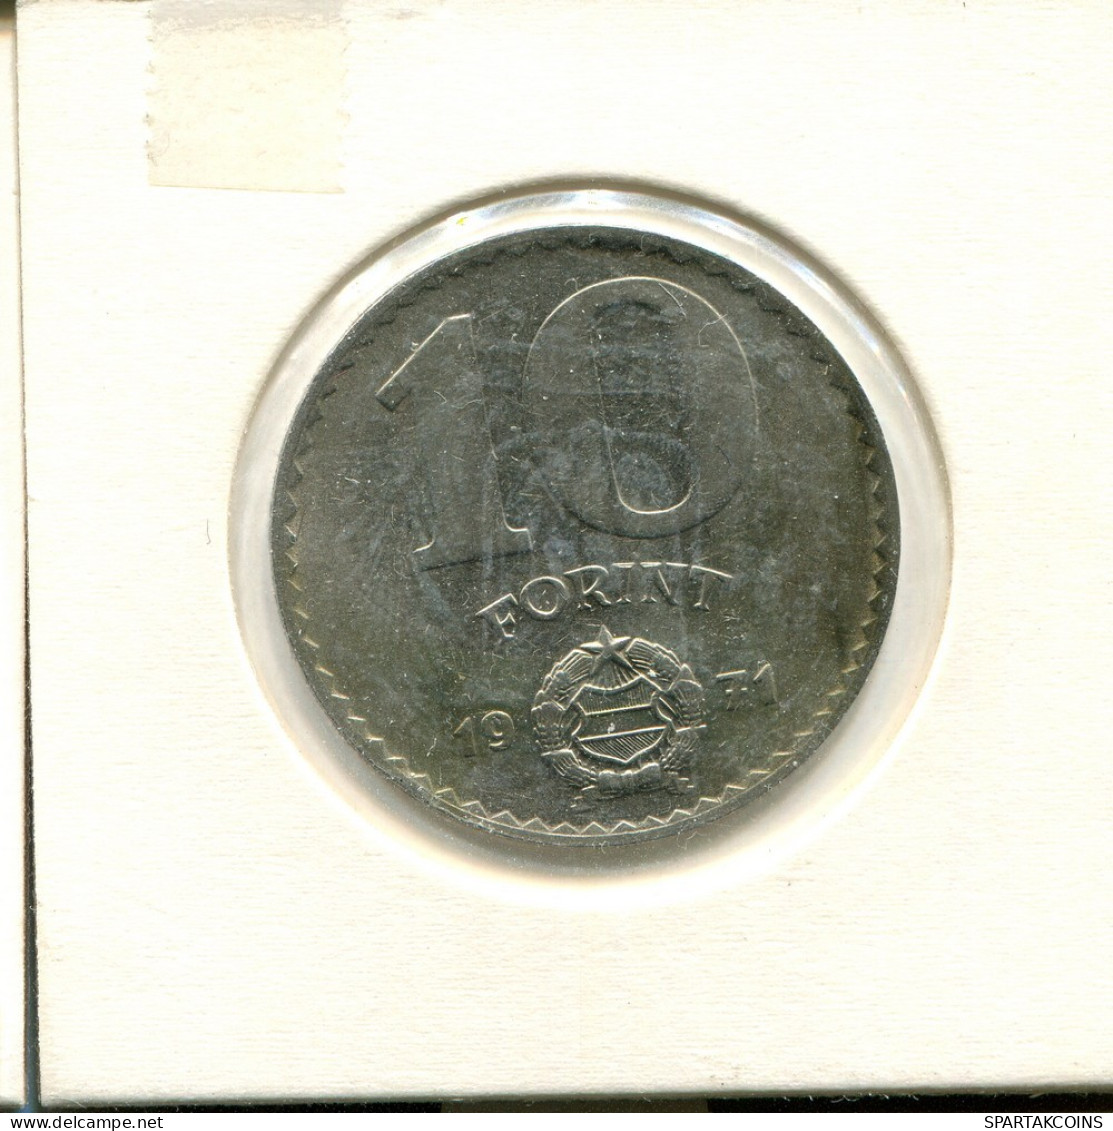 10 FORINT 1971 HUNGARY Coin #AS498.U.A - Hungary